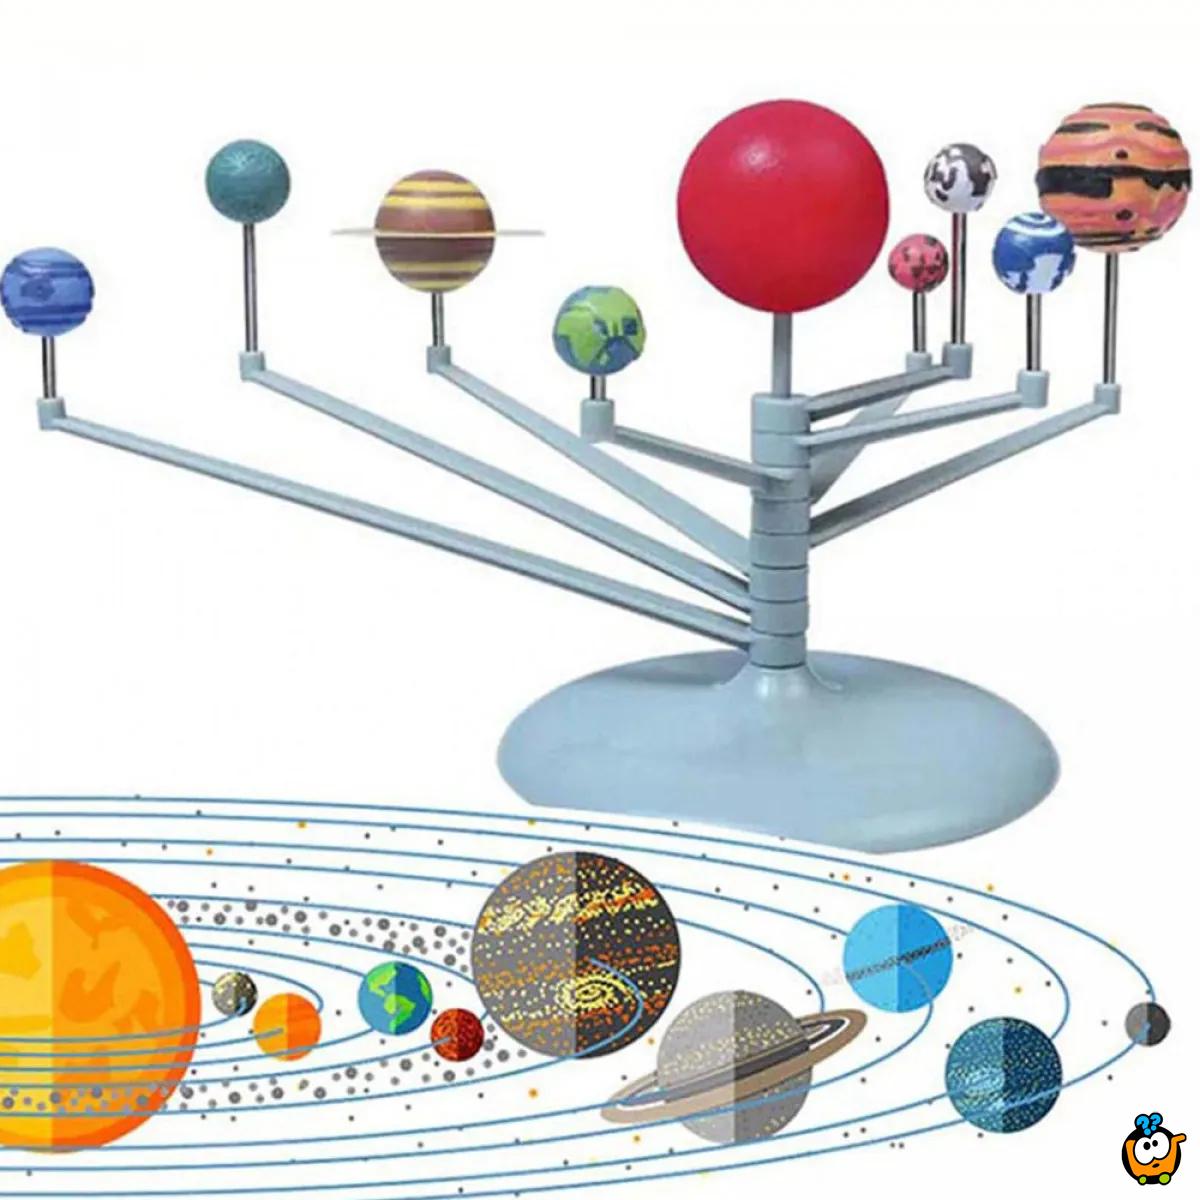 PLANETARIJUM - Solarni sistem devet planeta